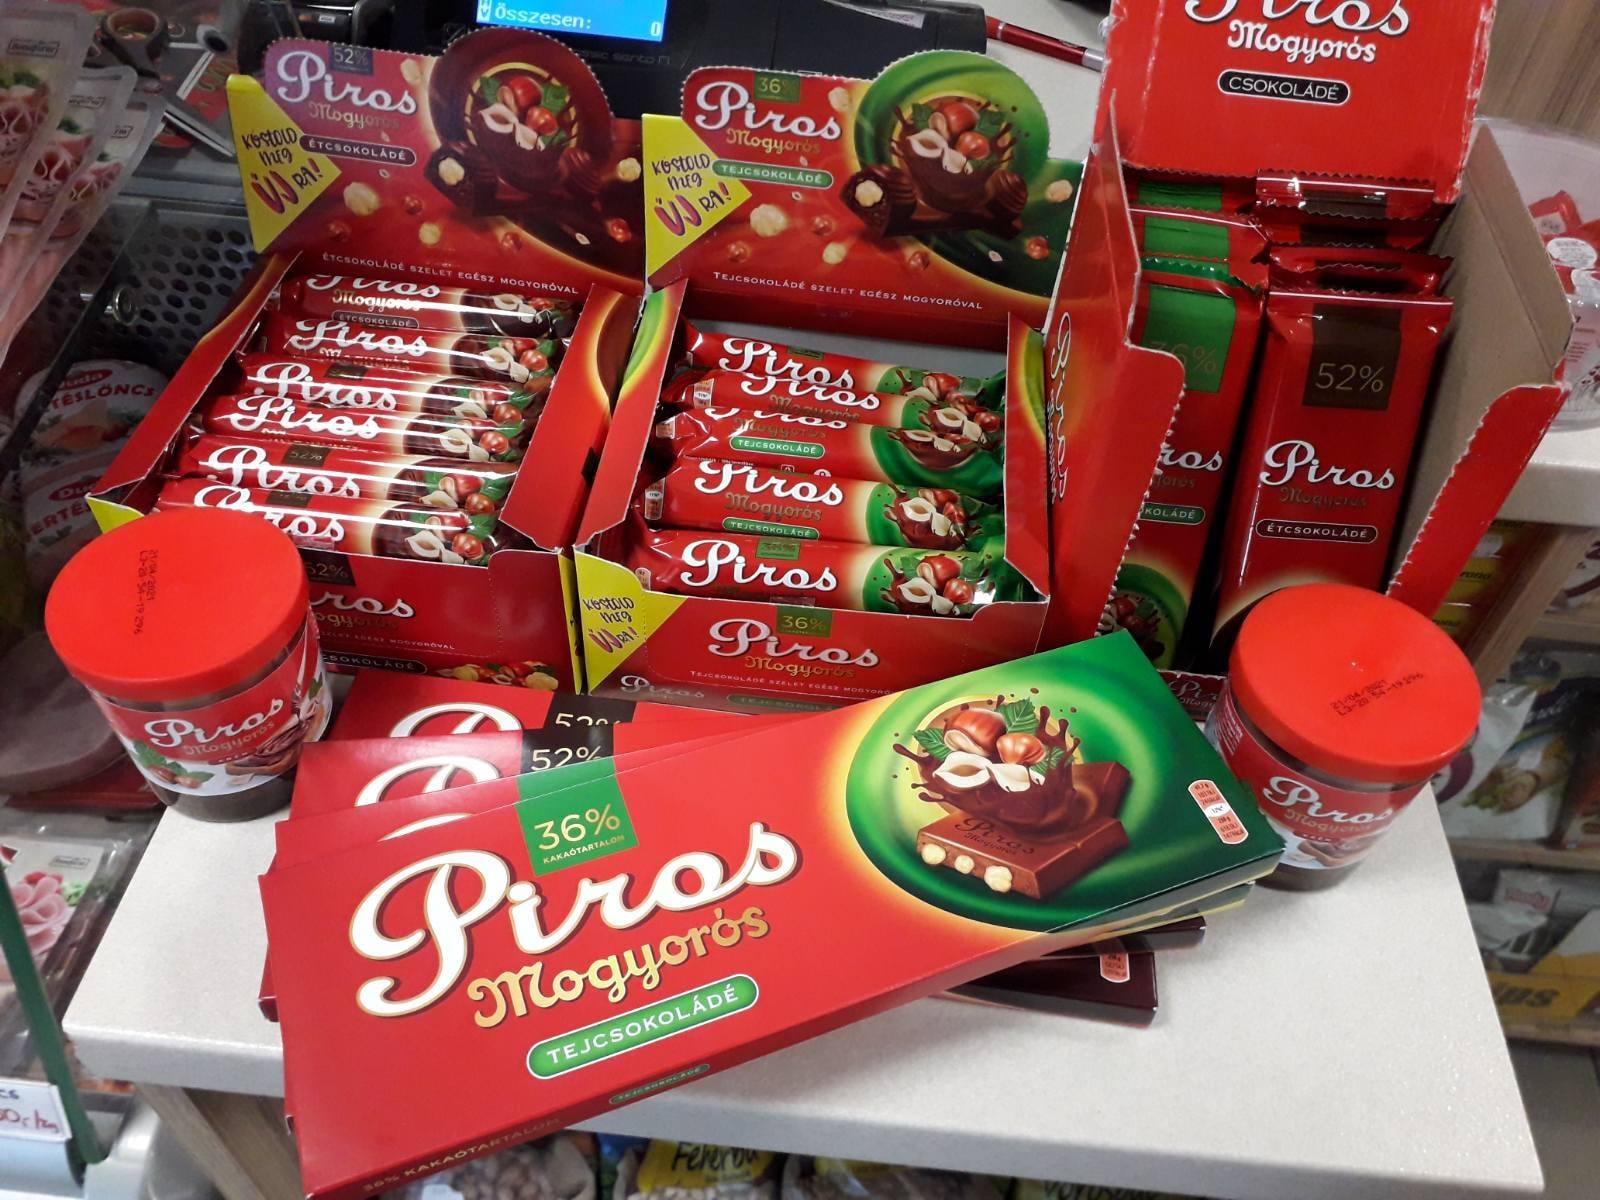 Piros mogyorós, chocolate, Hungría